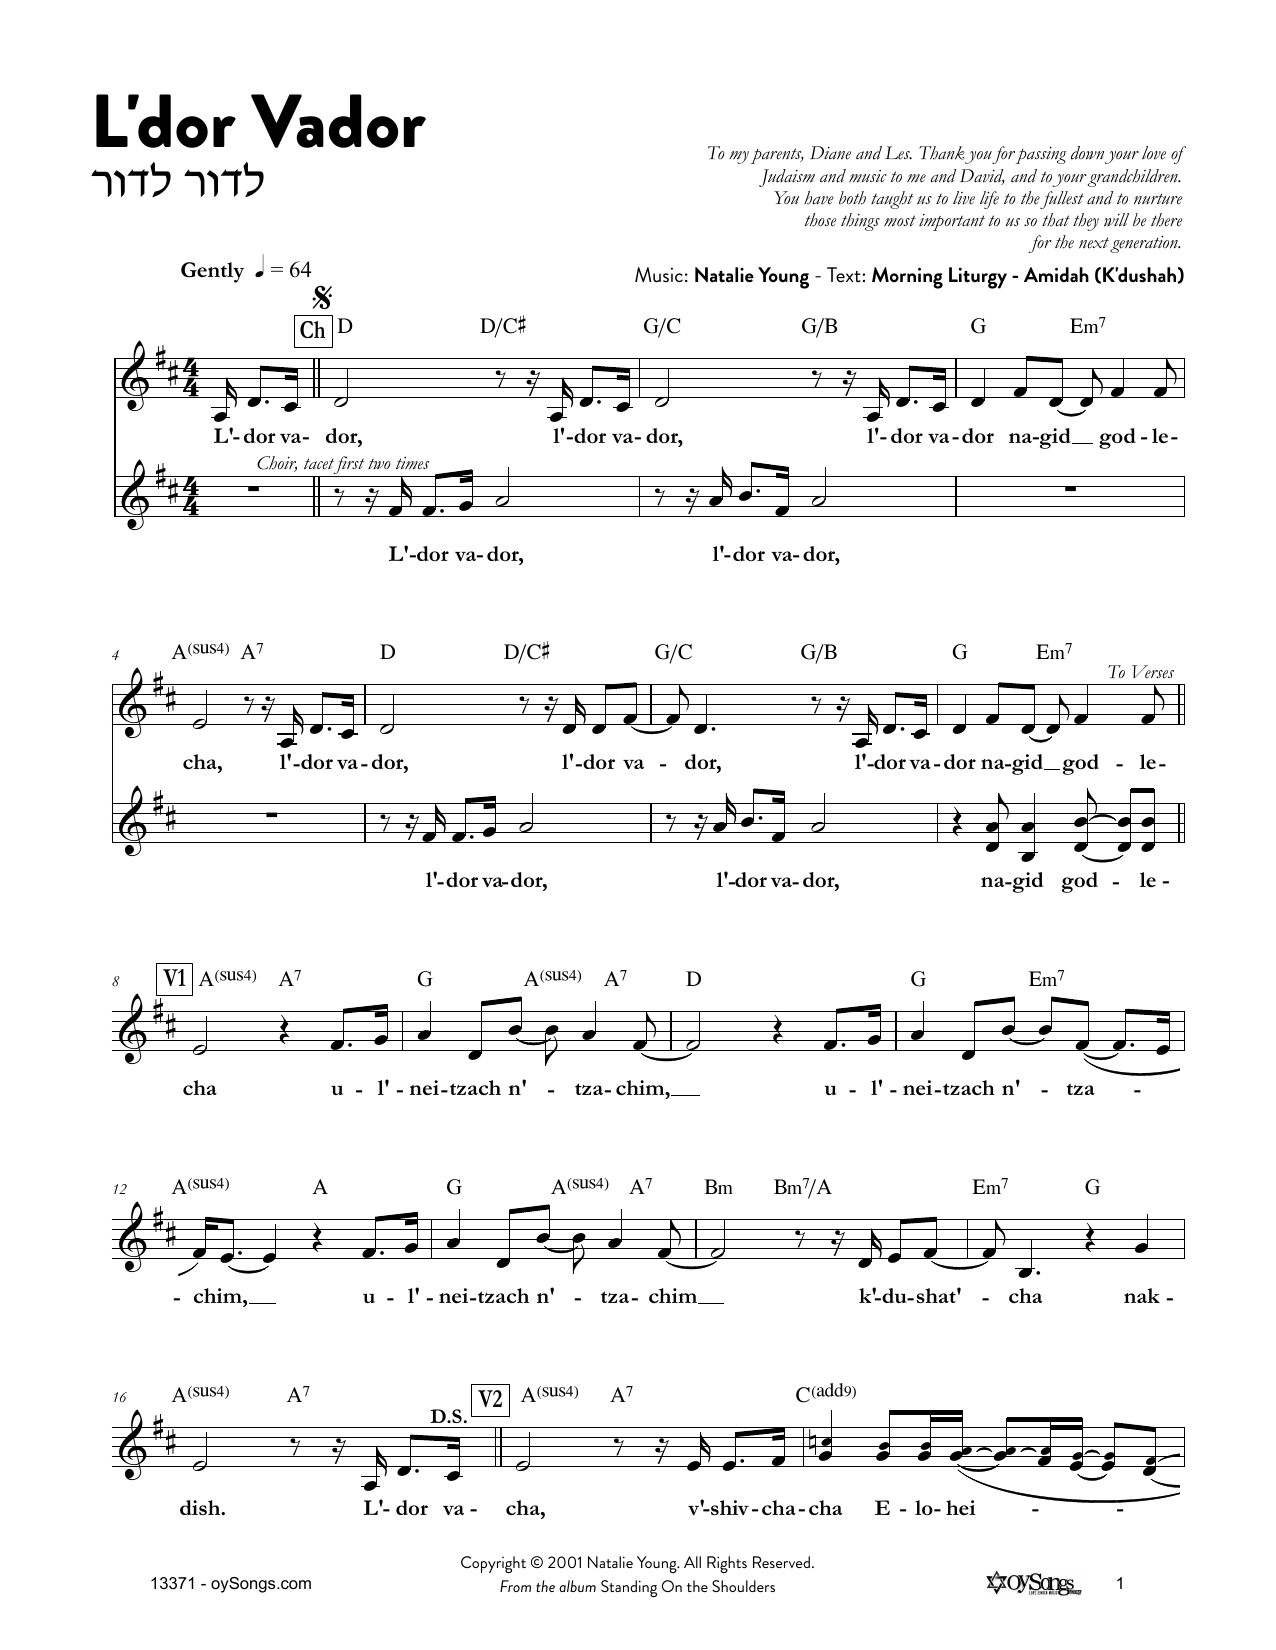 Natalie Young L'dor Vador Sheet Music Notes & Chords for Melody Line, Lyrics & Chords - Download or Print PDF